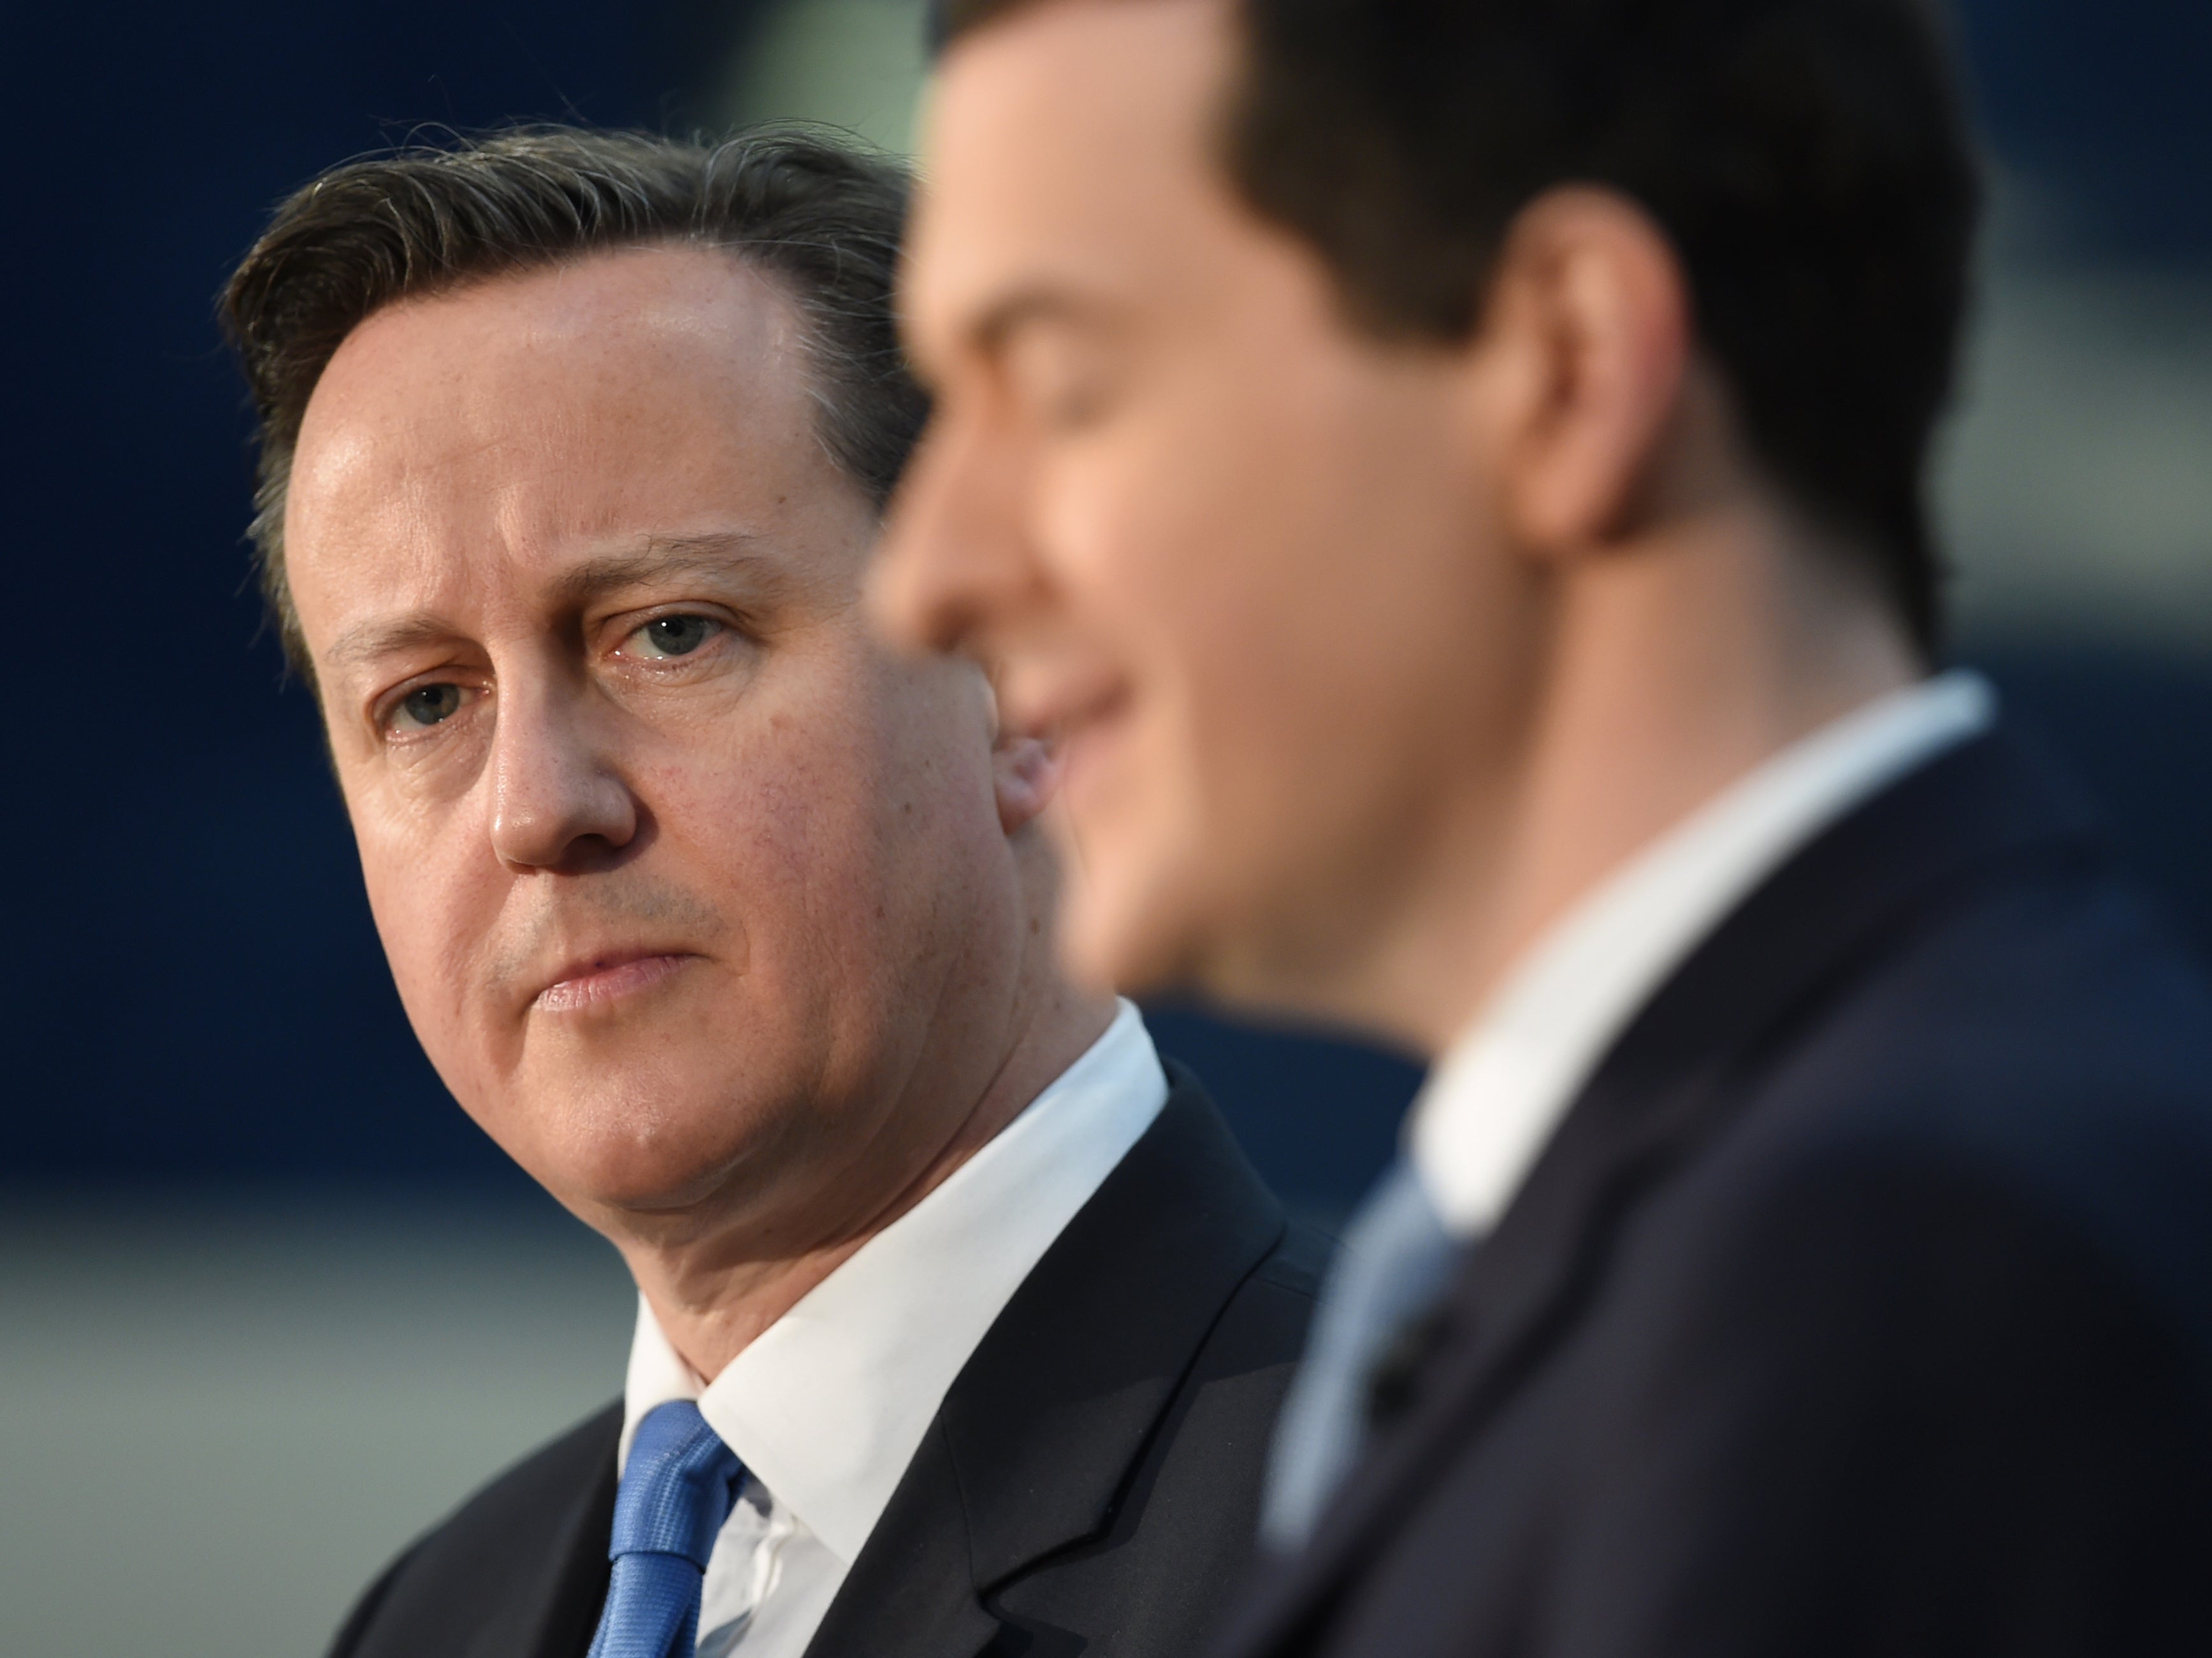 Former PM David Cameron and his chancellor George Osborne